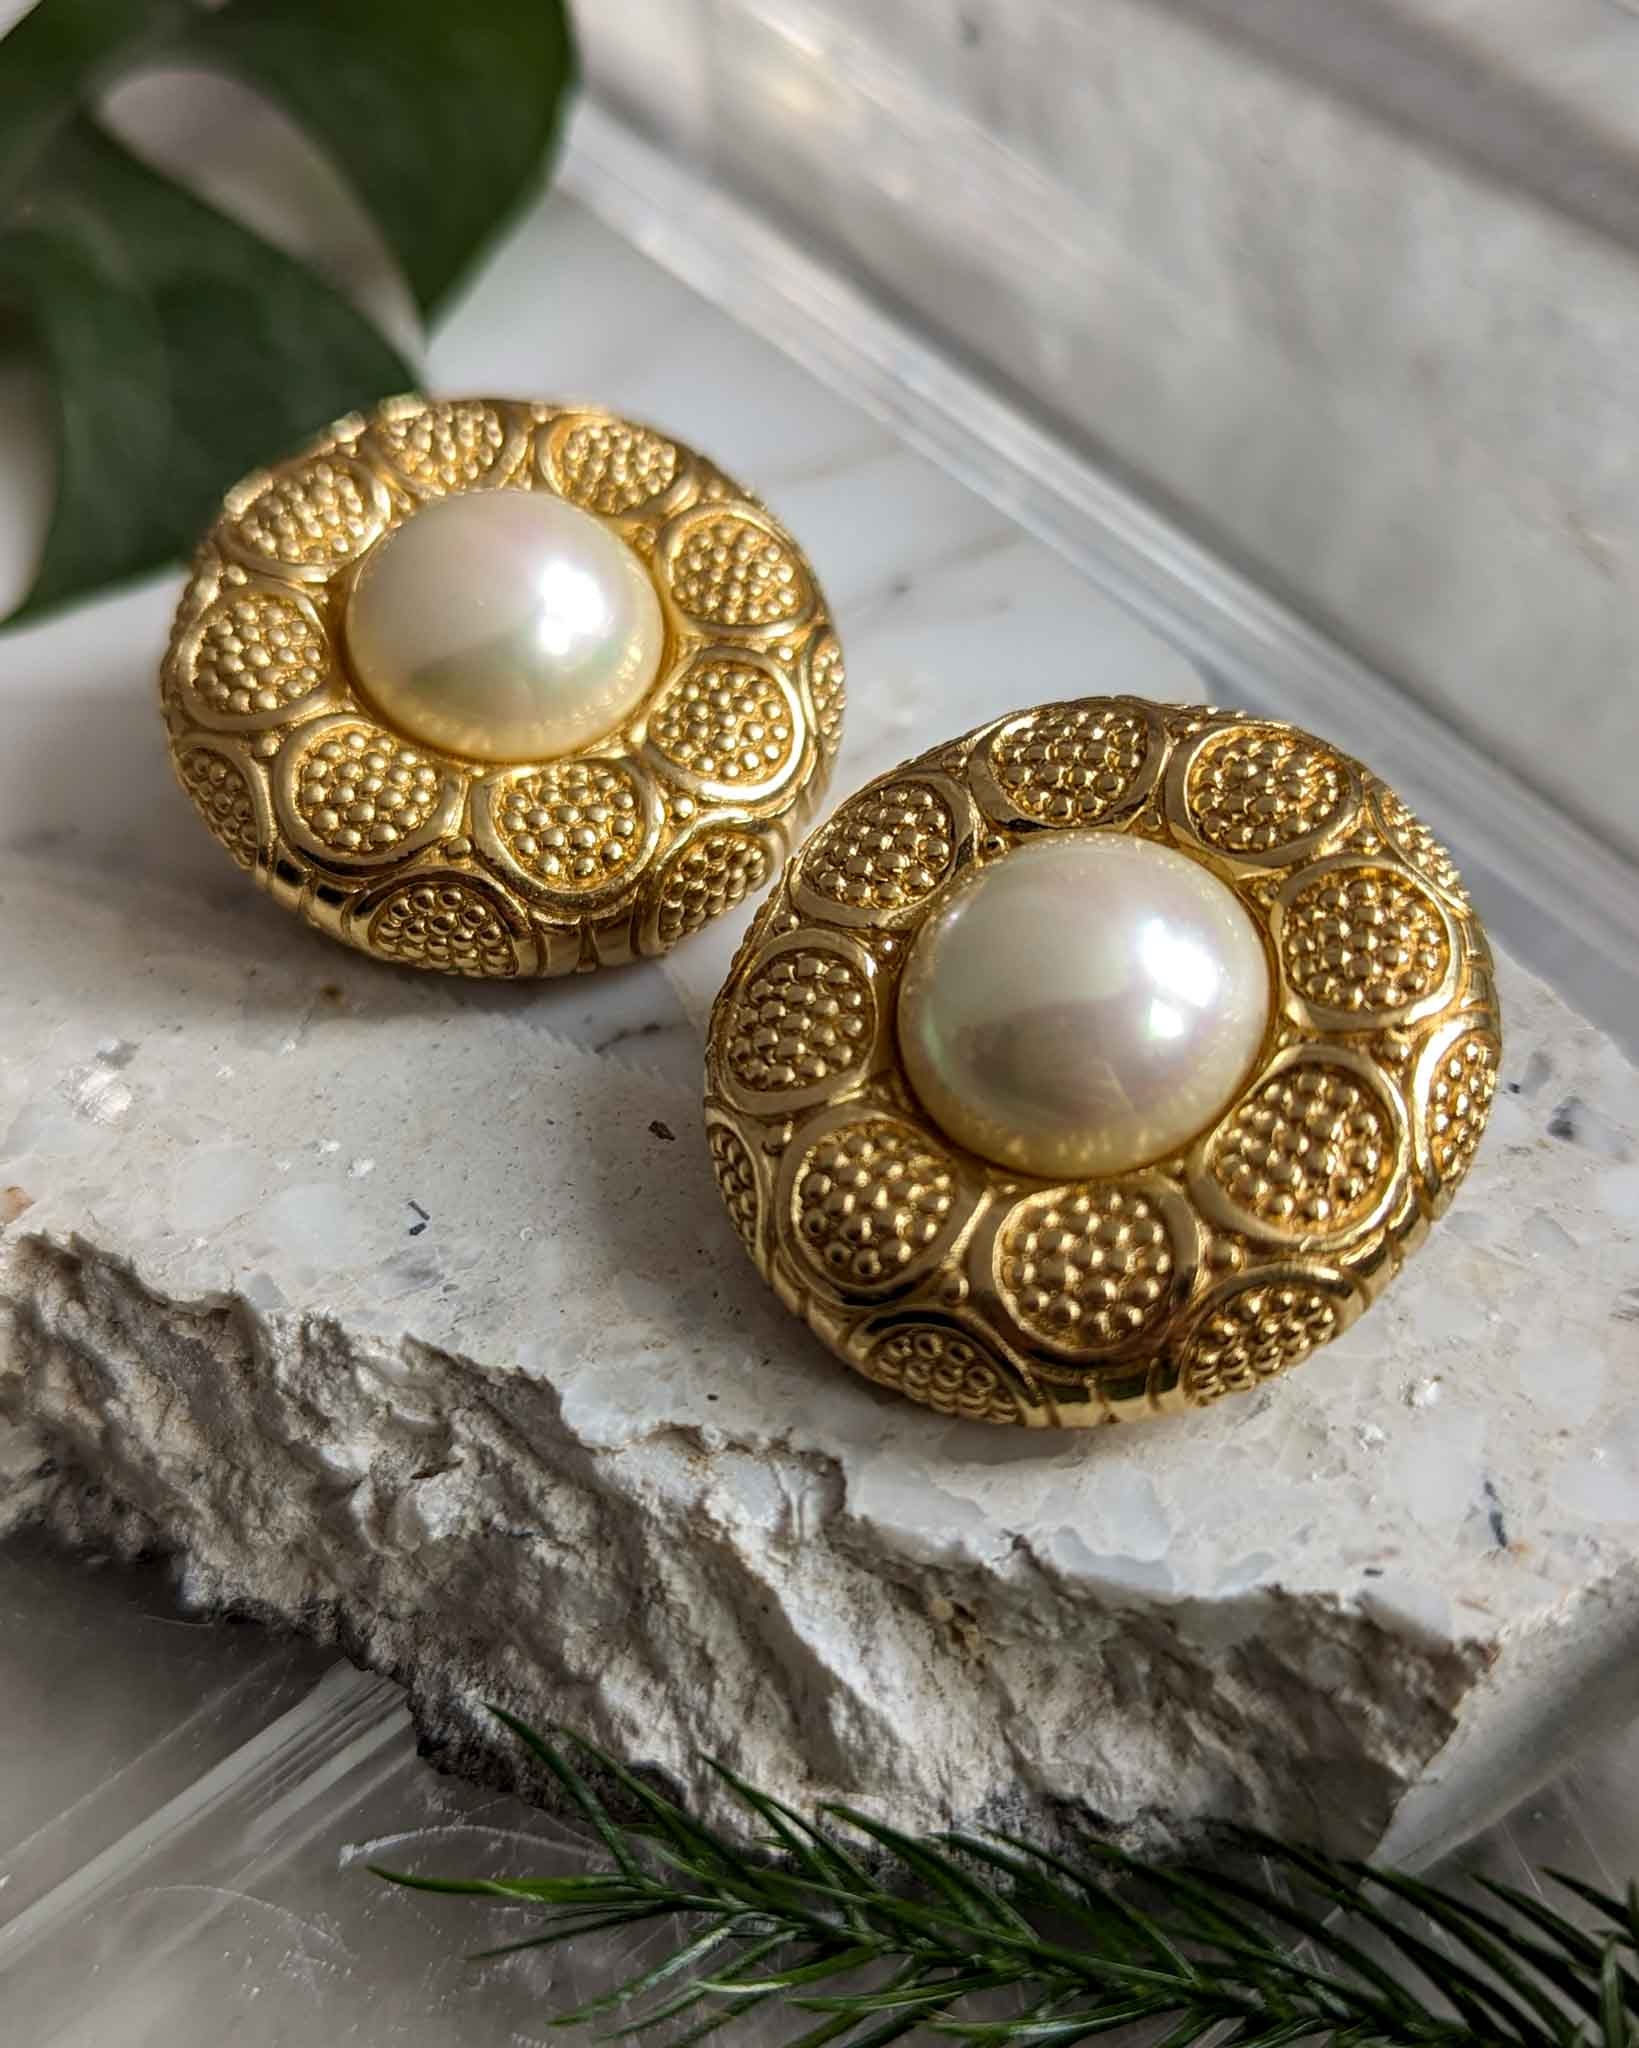 Vintage 18K Yellow Gold Pearl Earrings